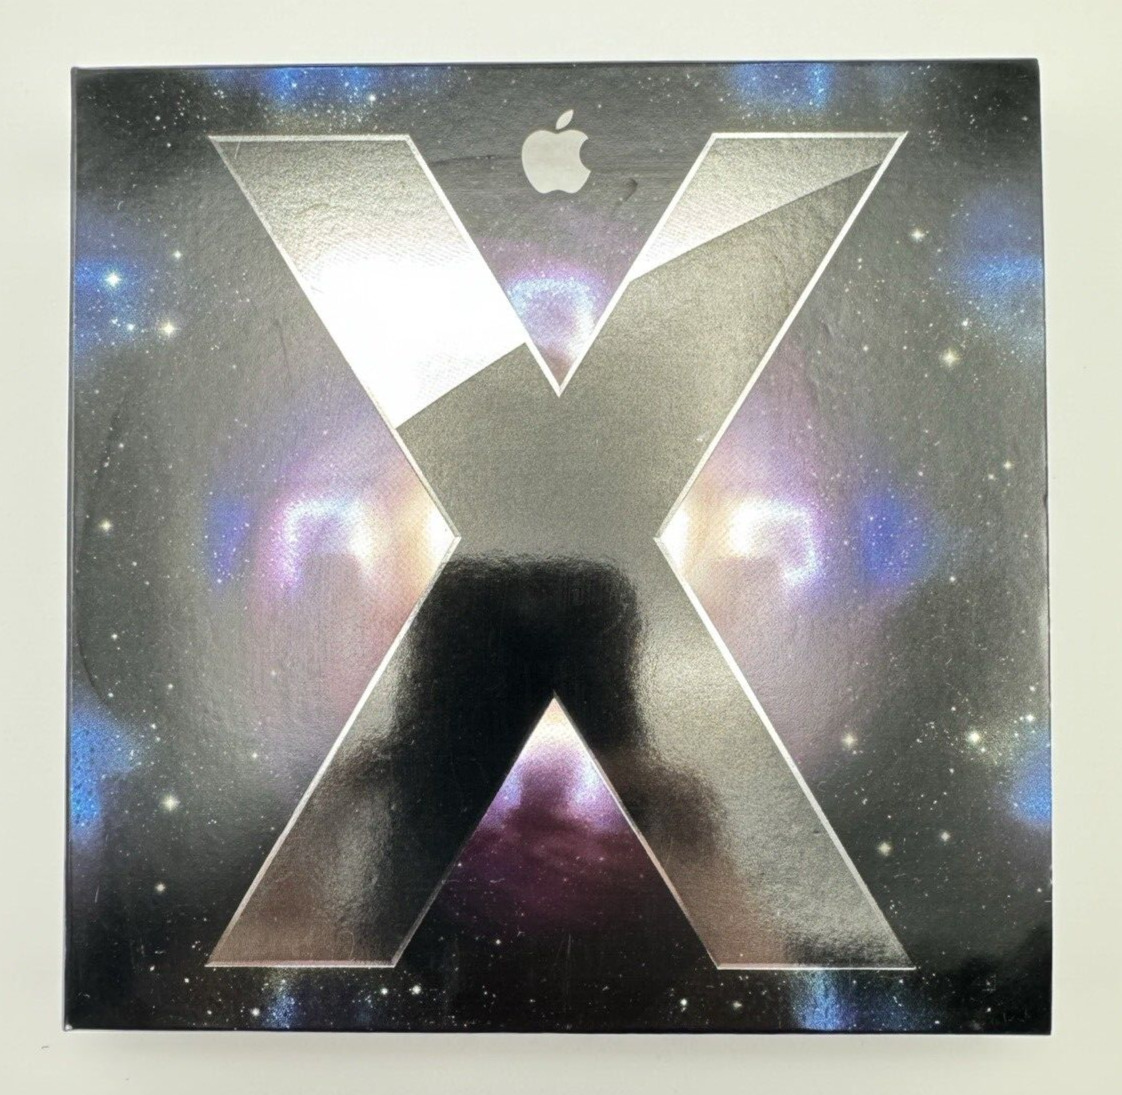 Apple Mac OS X Leopard Version 10.5.6 MC094Z/A Operating System